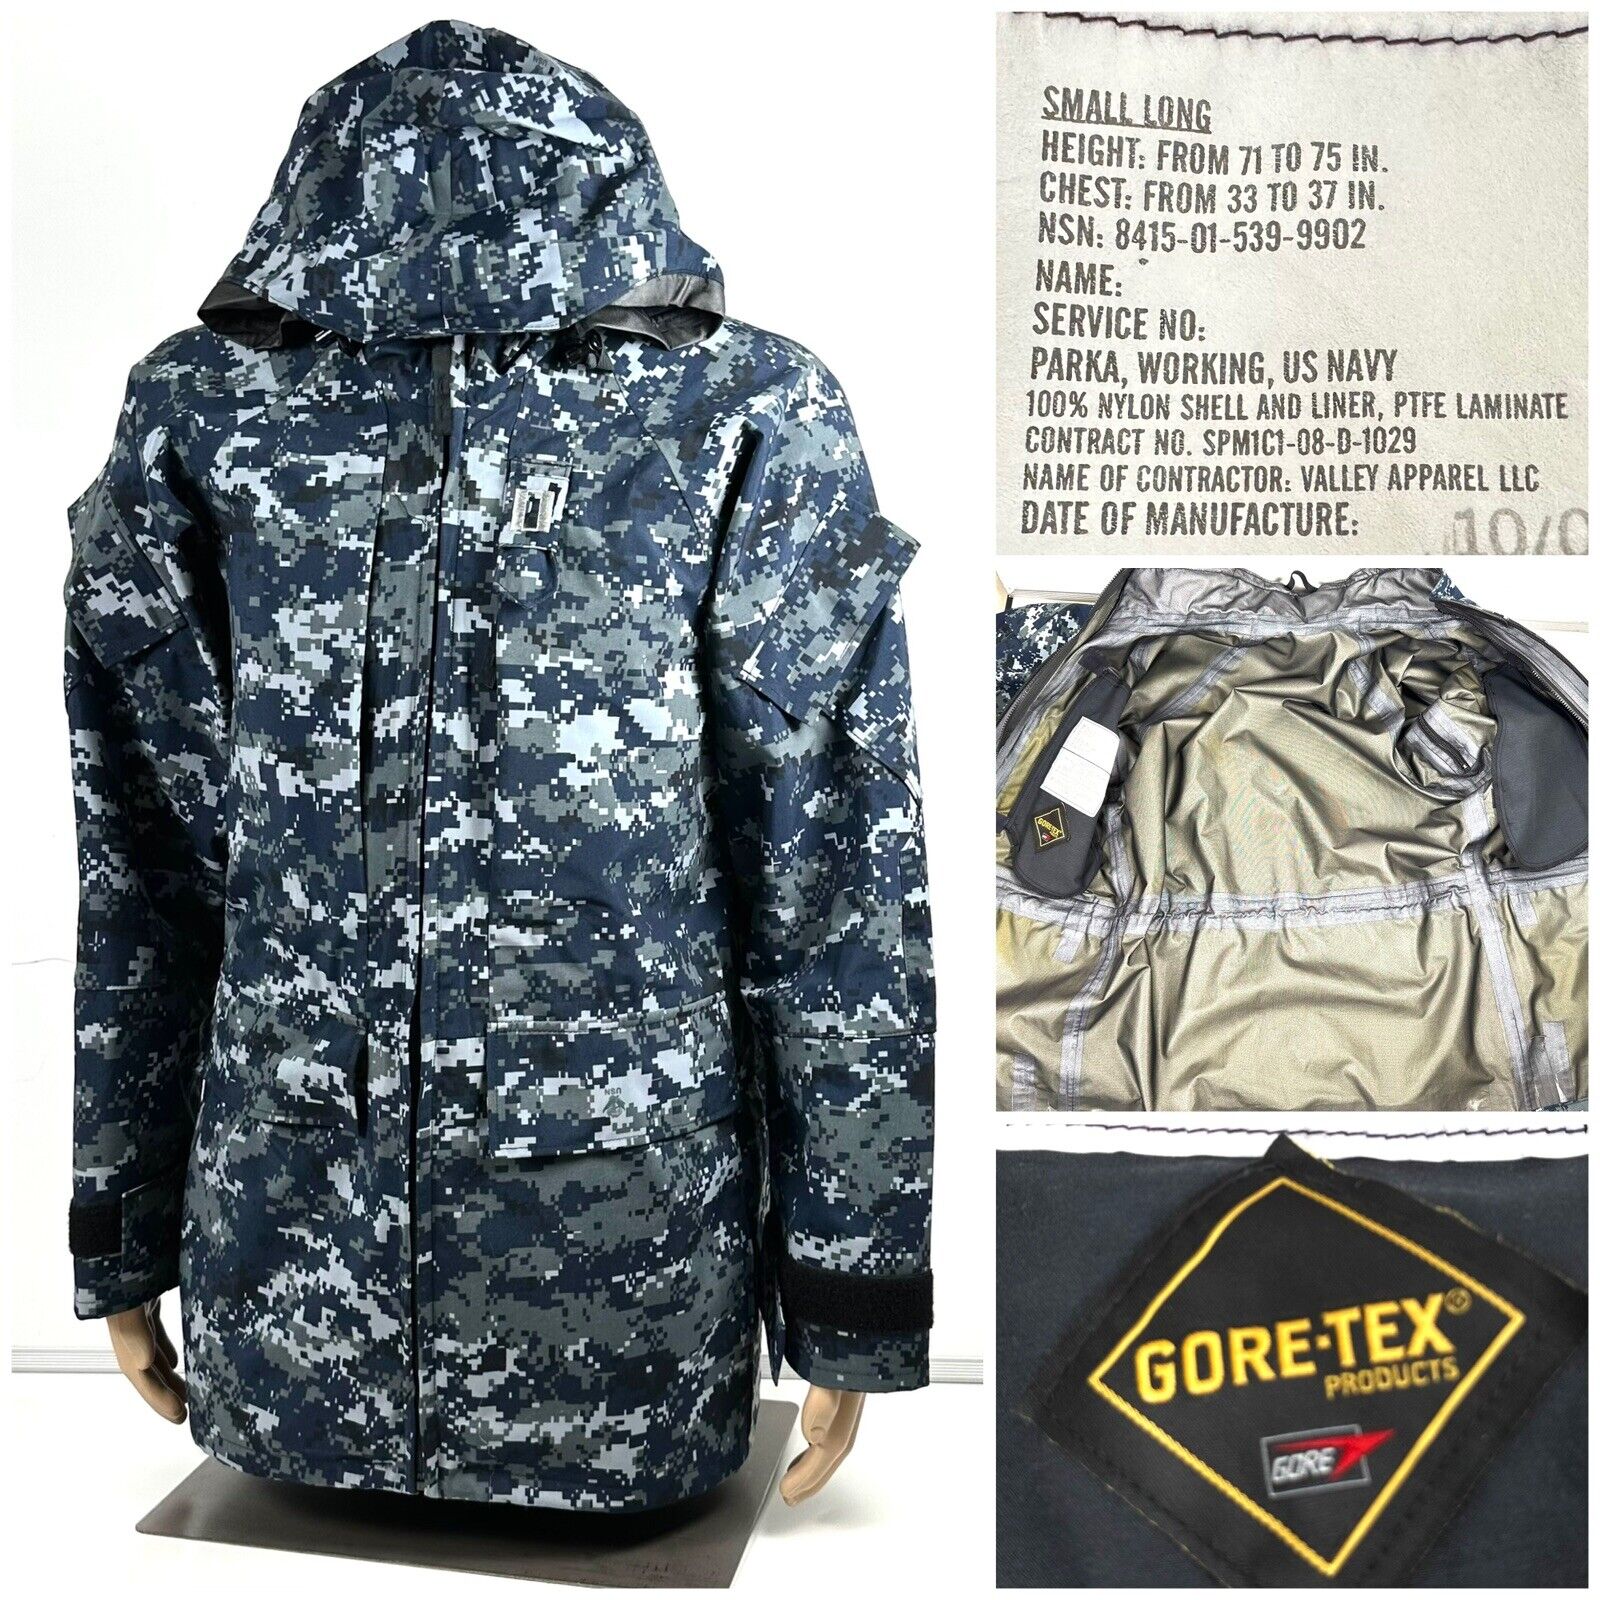 Genuine Men’s US Navy USN Digital GoreTex Working Parka Jacket Size Small Long